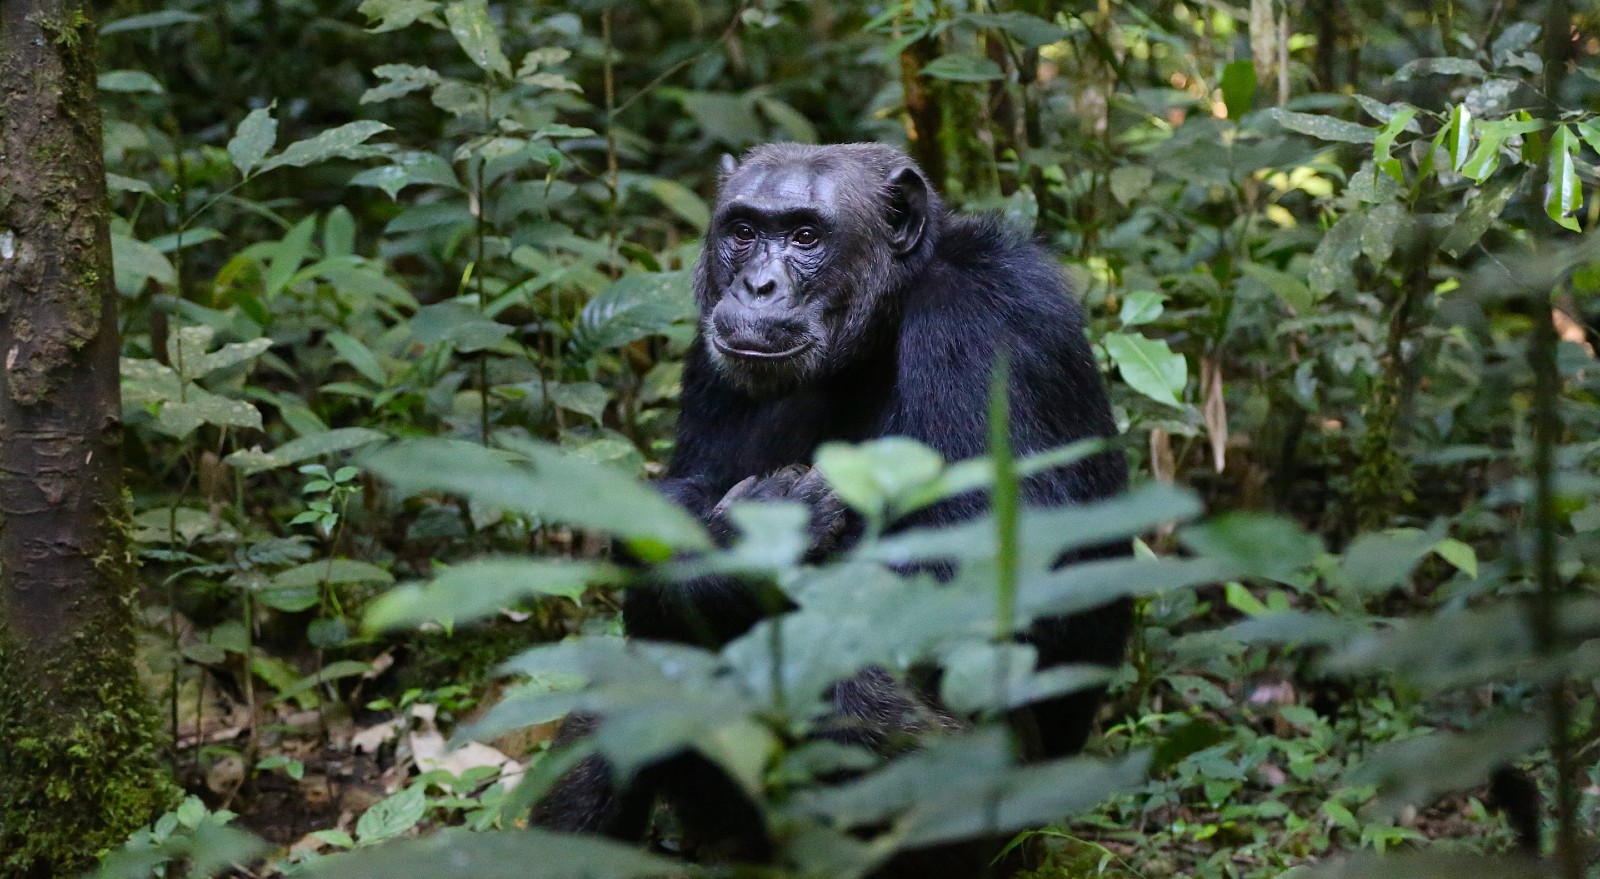 A primate sitting alone in the dense jungle undergrowth